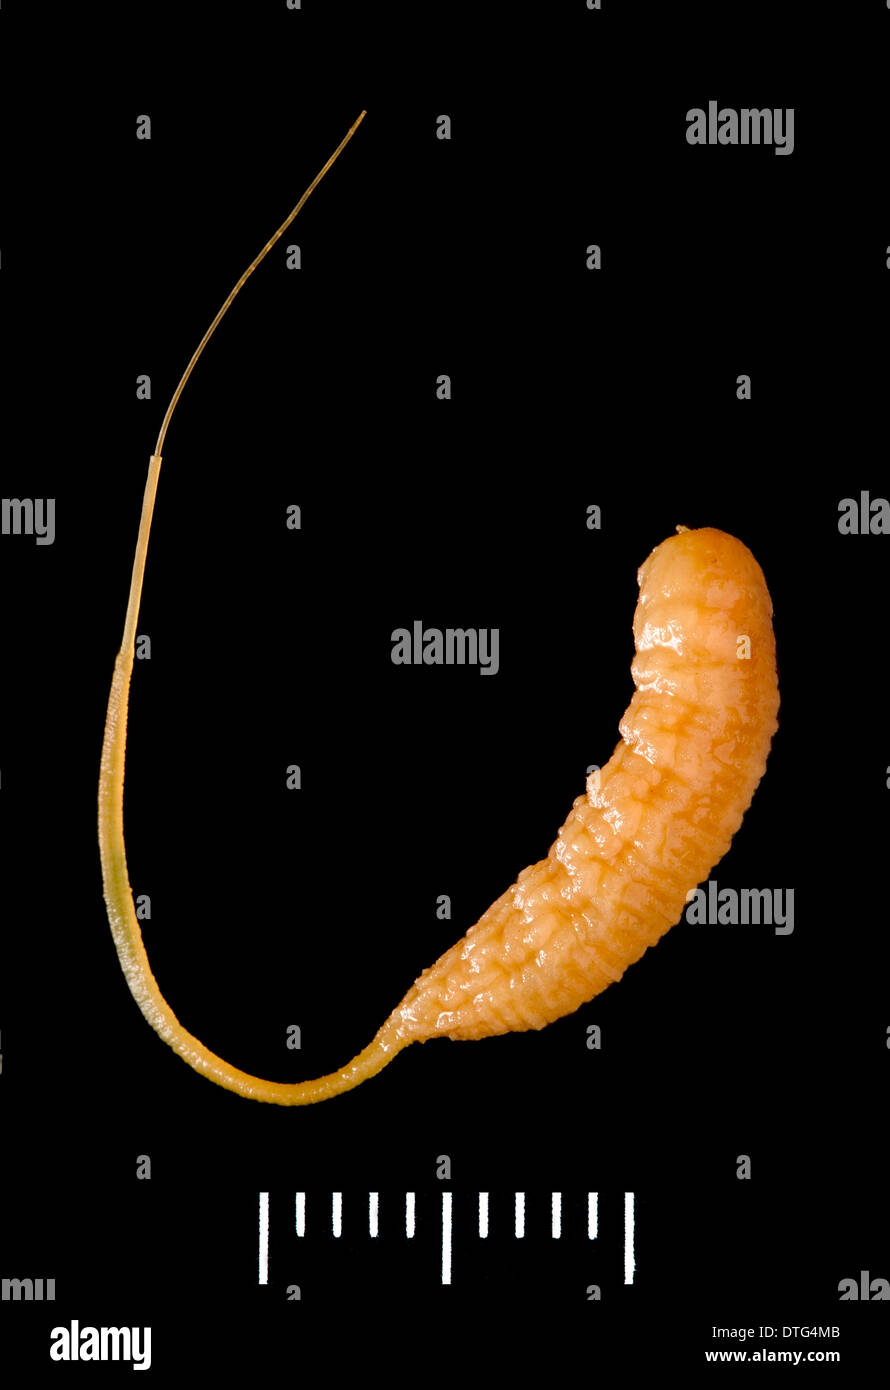 Eristalis tenax, drone-fly larvae Stock Photo - Alamy